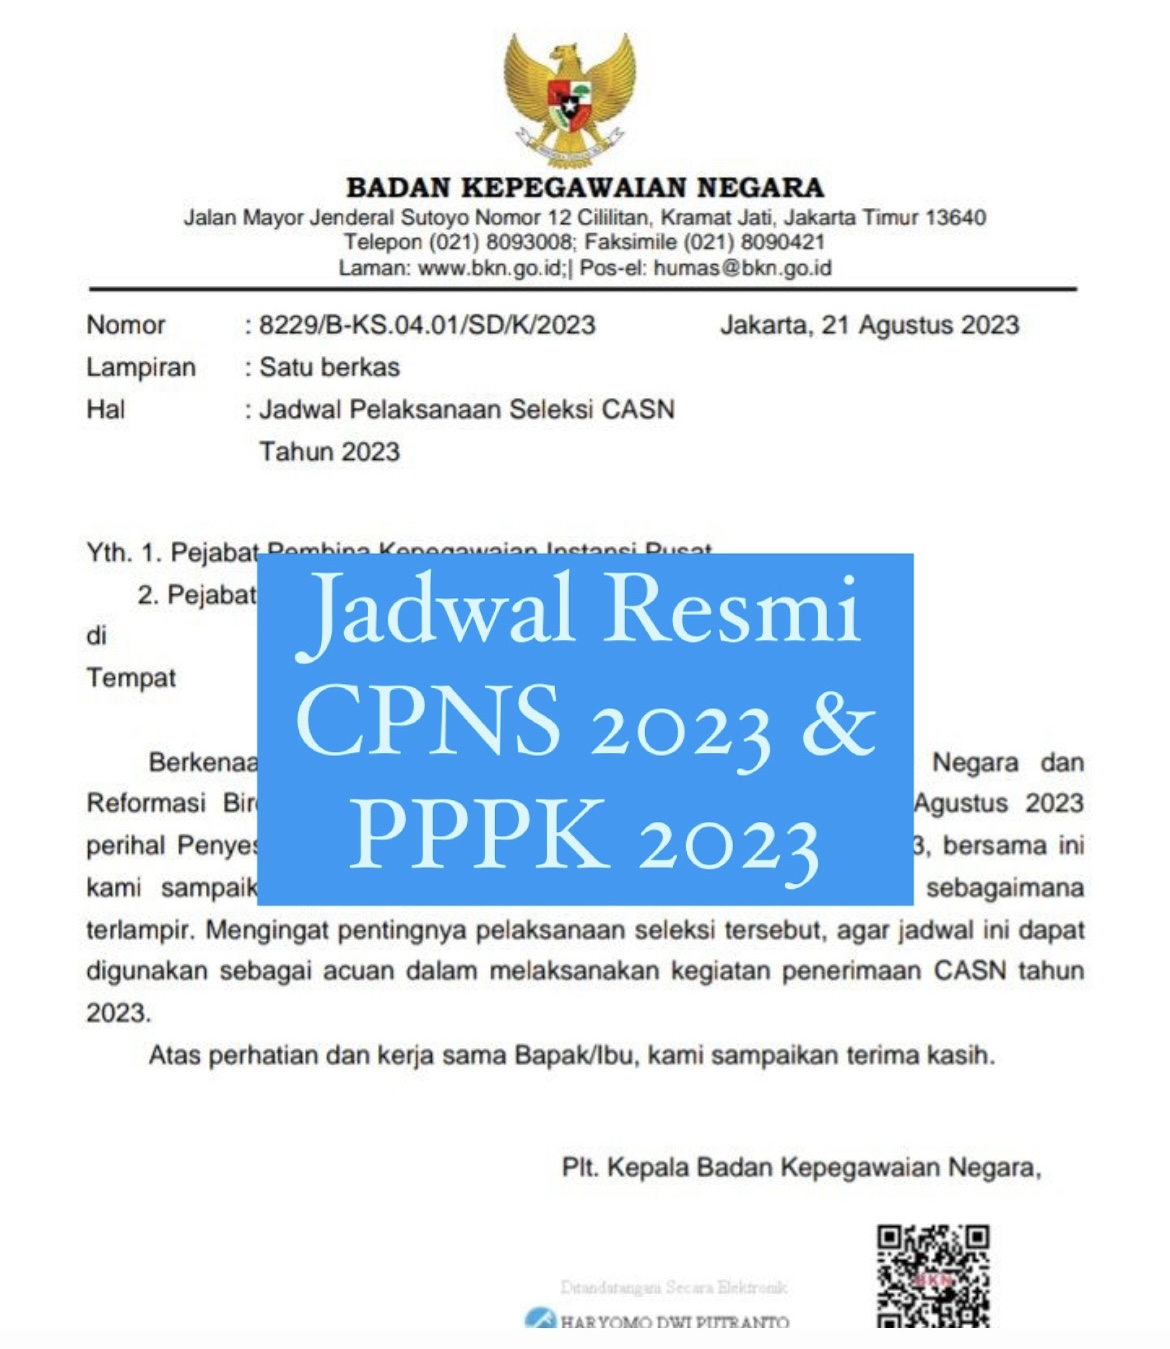 Jadwal Resmi CPNS 2023 & PPPK 2023 oleh BKN